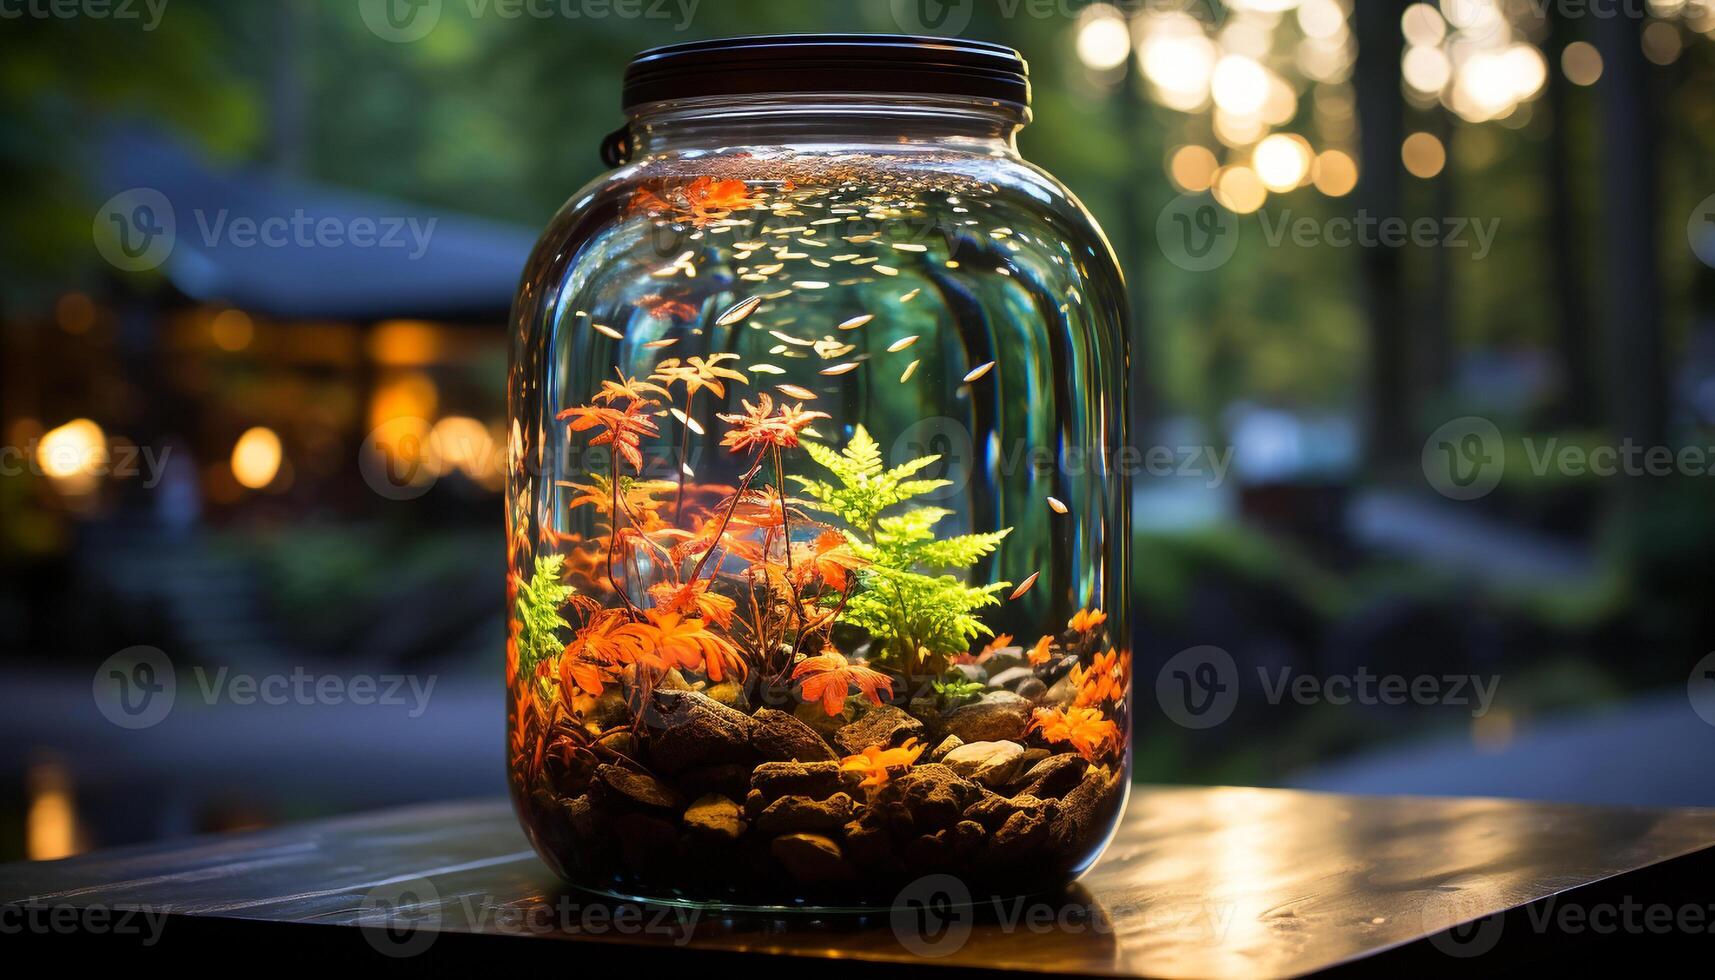 AI generated A cute fish in a glass jar generated by AI photo